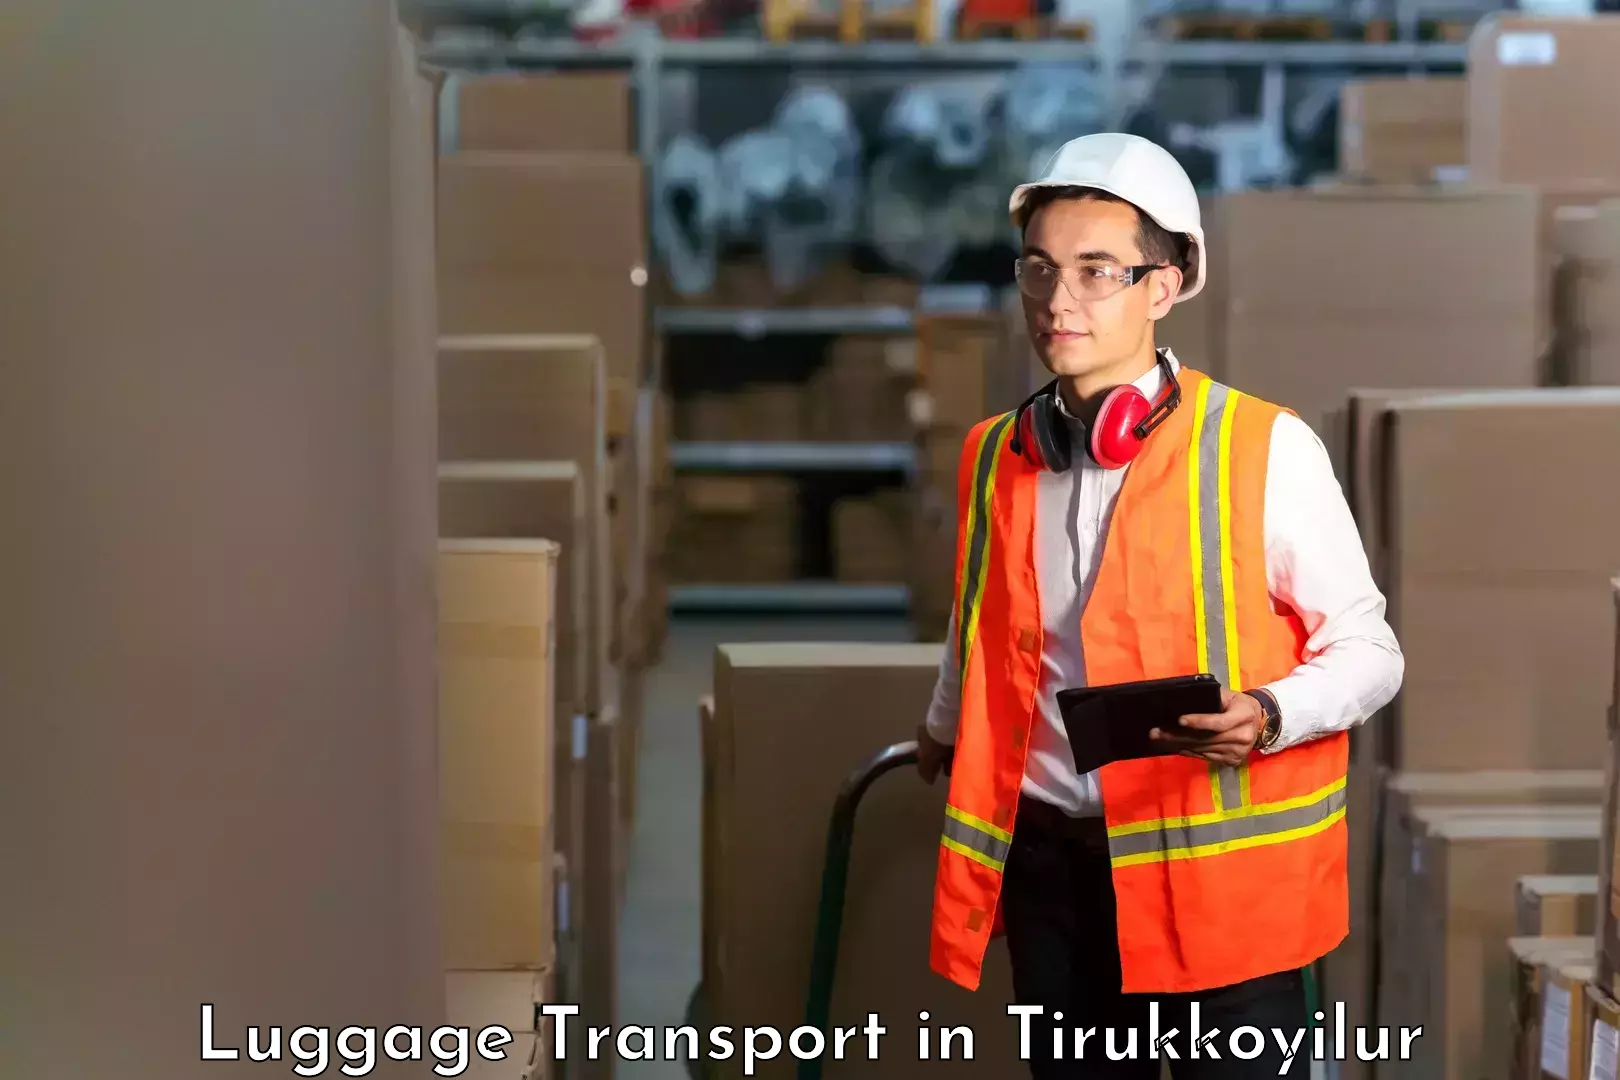 Luggage shipment strategy in Tirukkoyilur